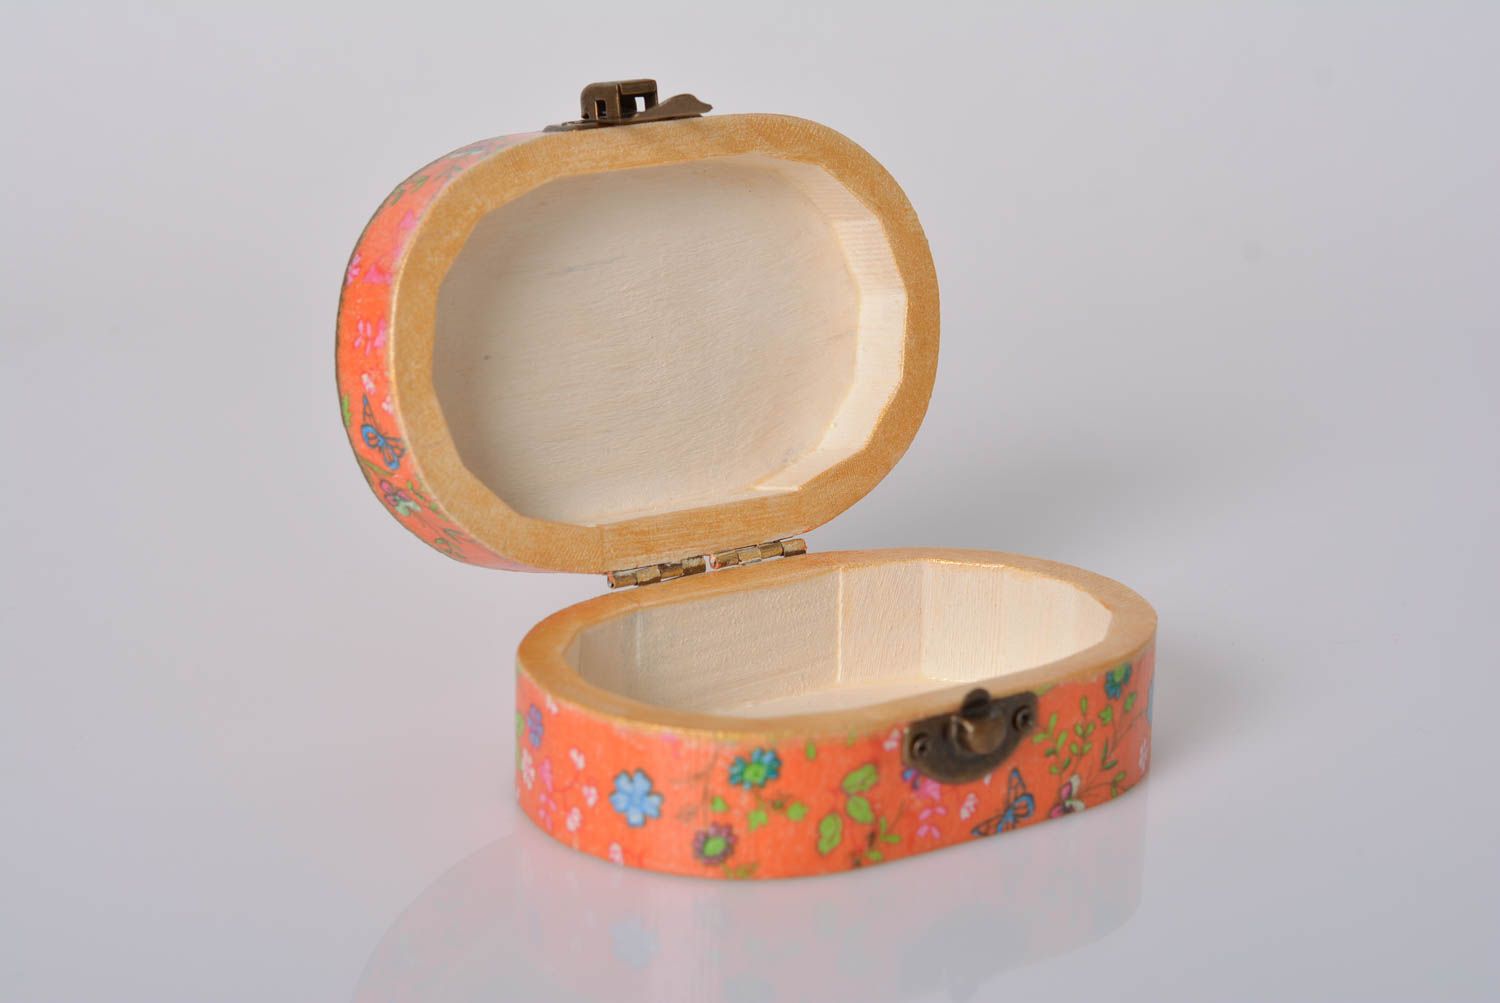 Beautiful handmade designer decoupage wooden jewelry box with bear image photo 4